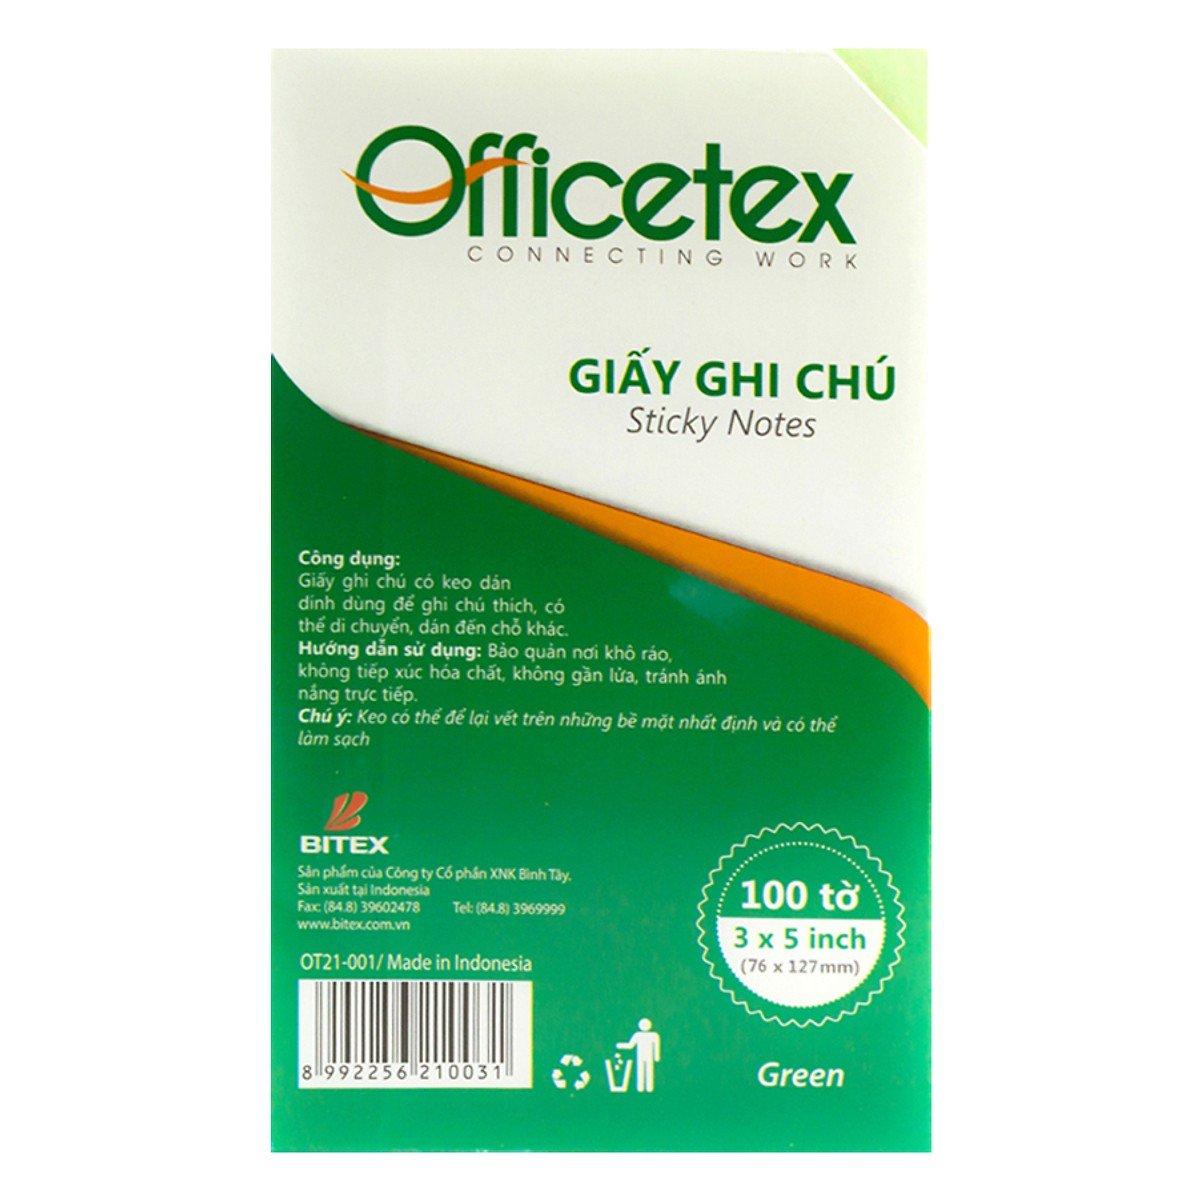 Giấy Ghi Chú Officetex - Green (3x5 inch)